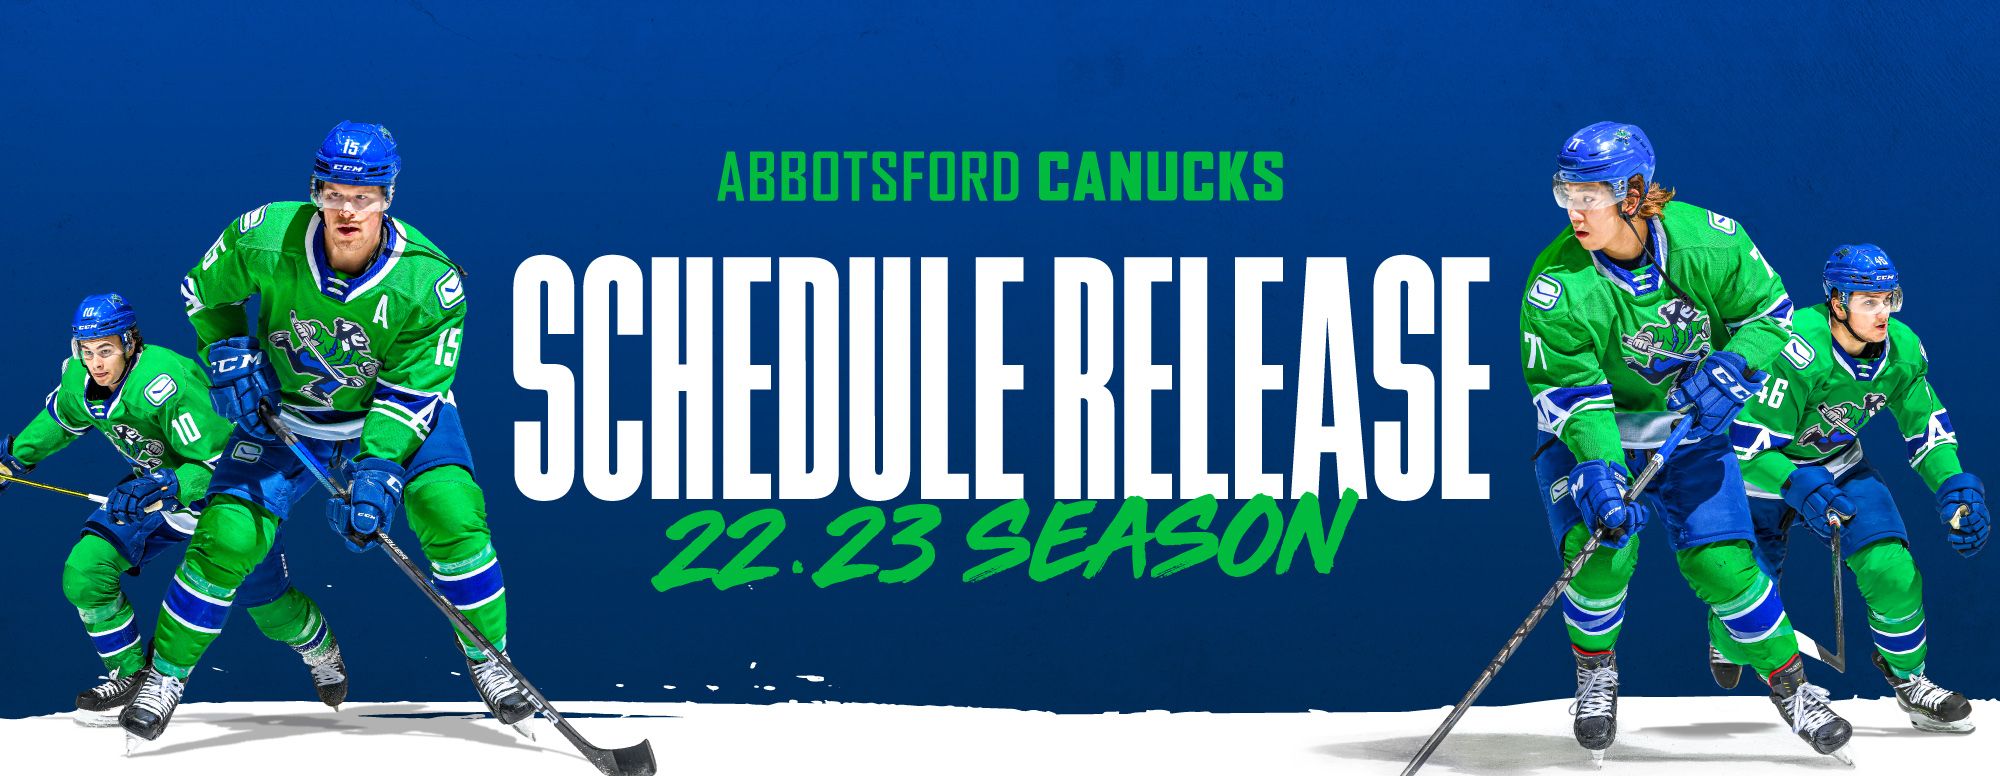 Abbotsford Canucks Announce 2022.23 Regular Season Schedule